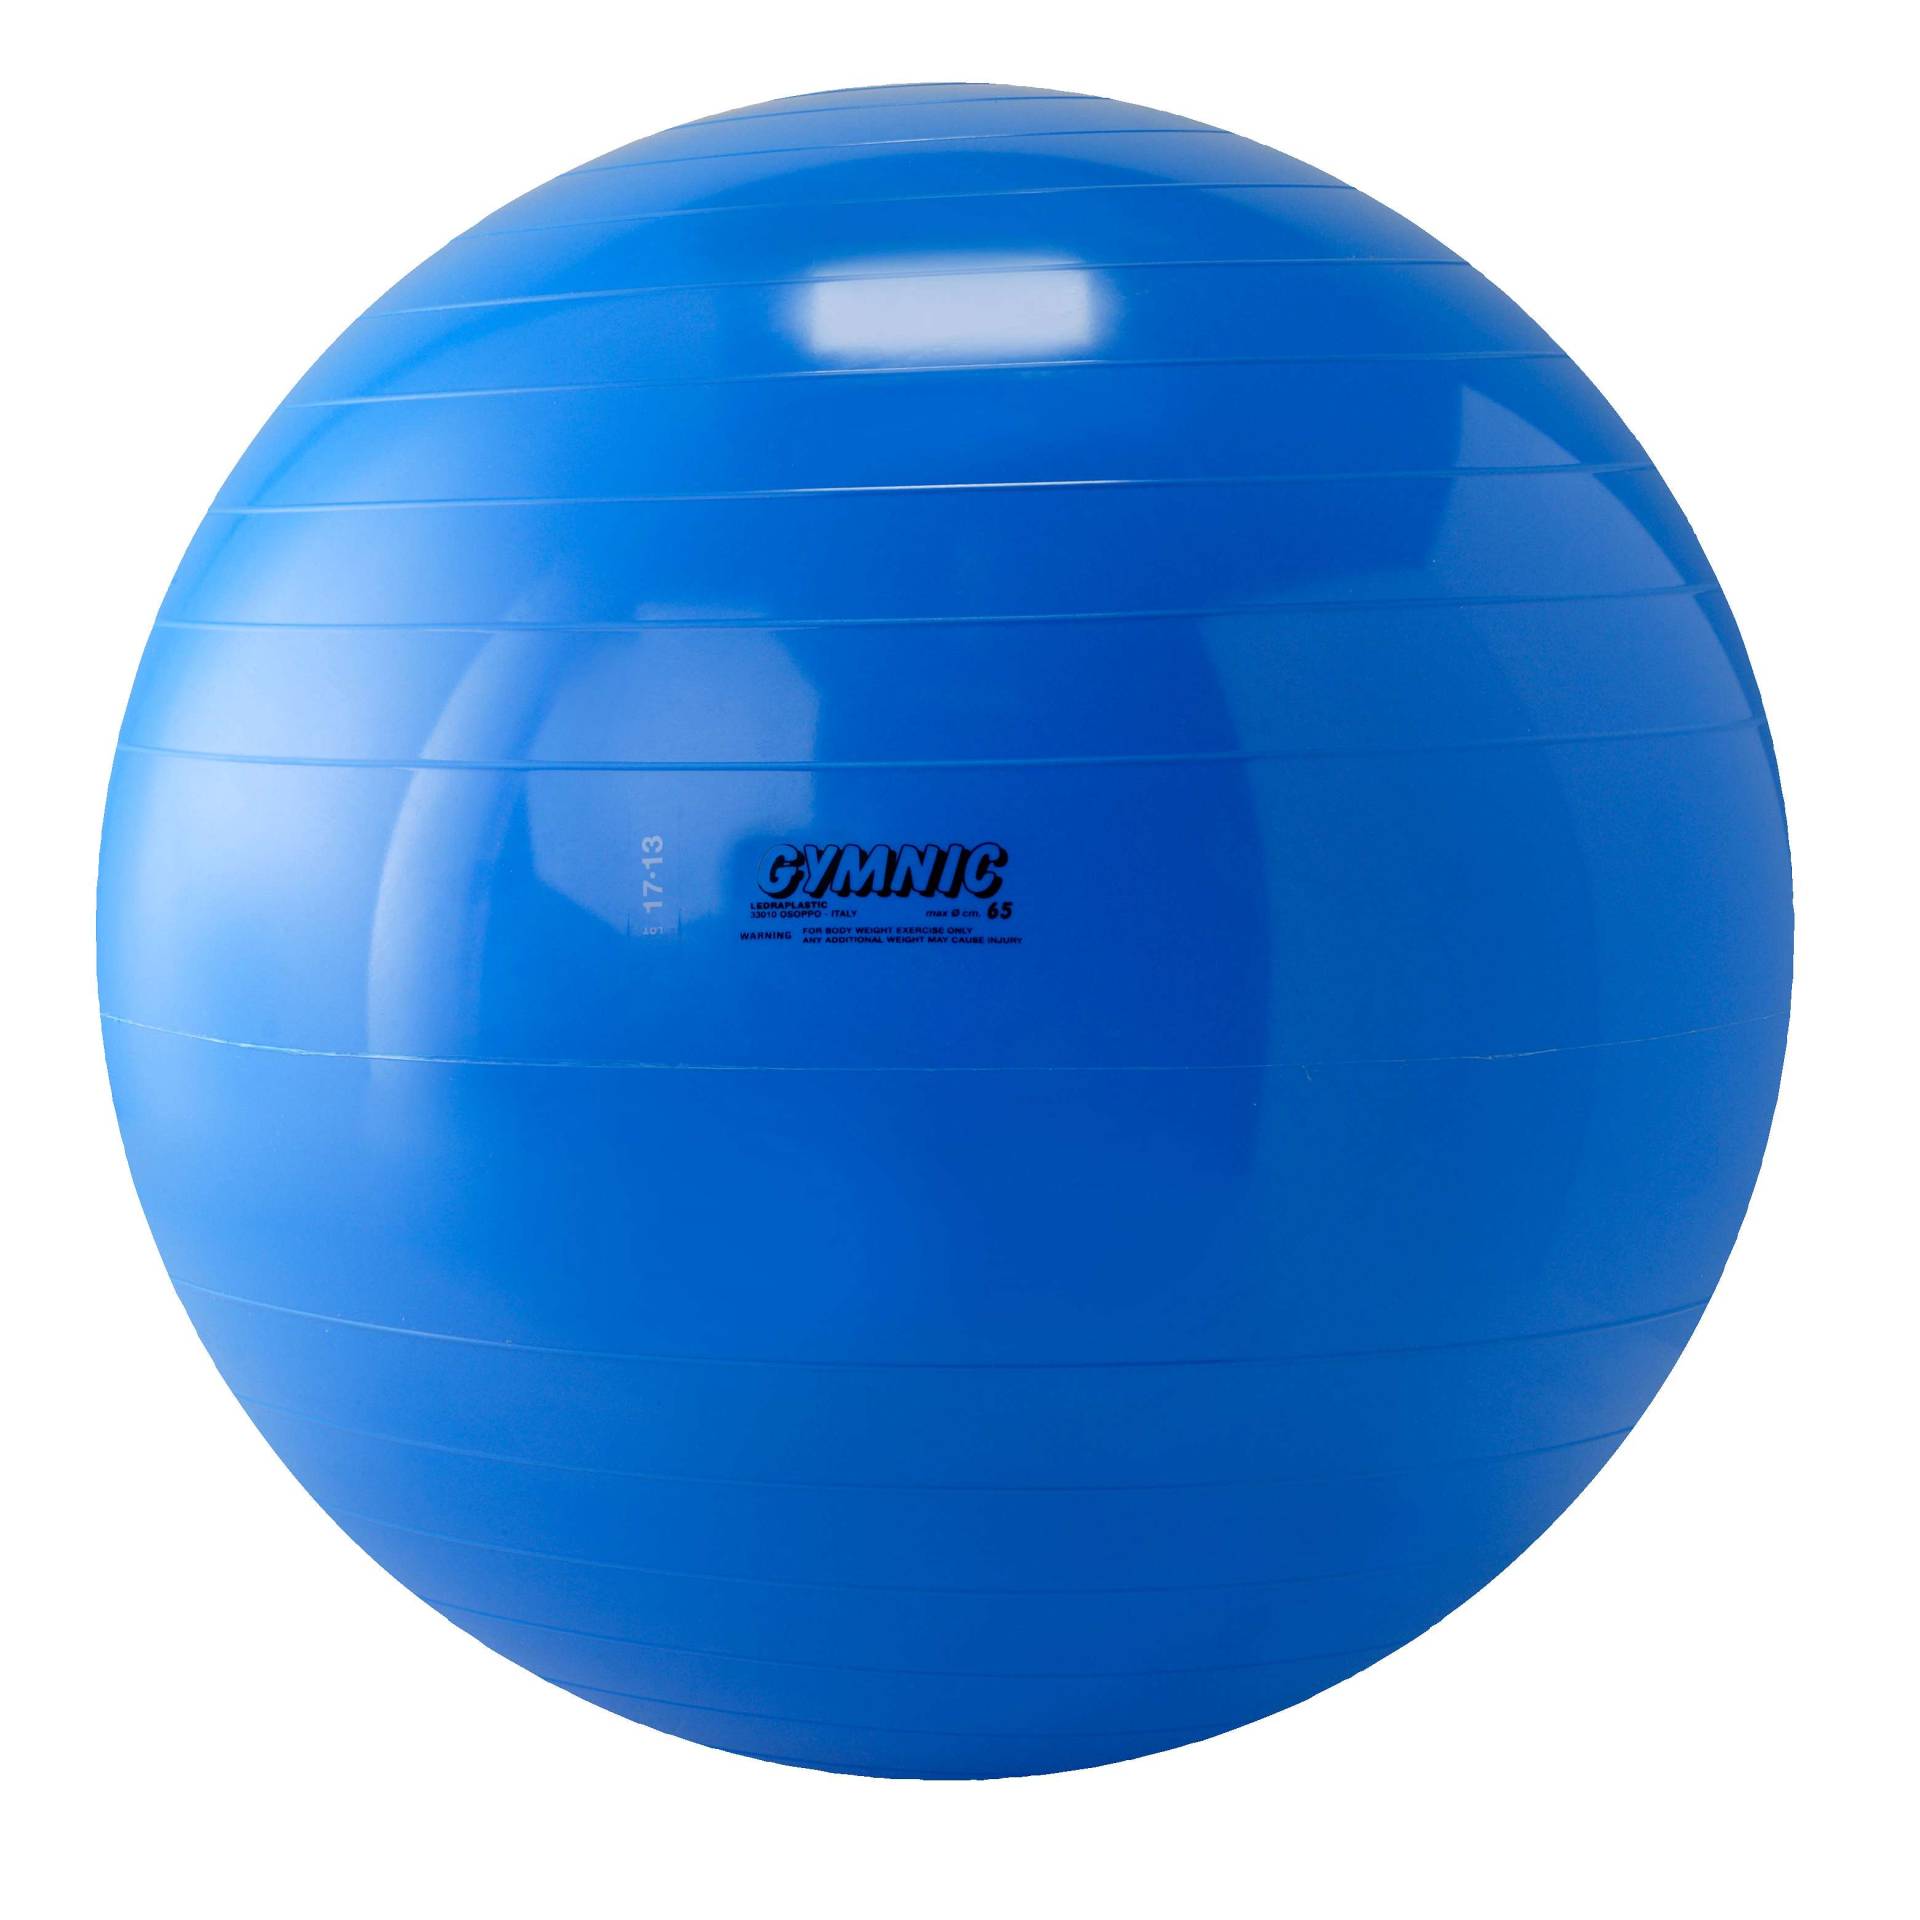 Gymnic Fitnessball, ø 65 cm von Gymnic